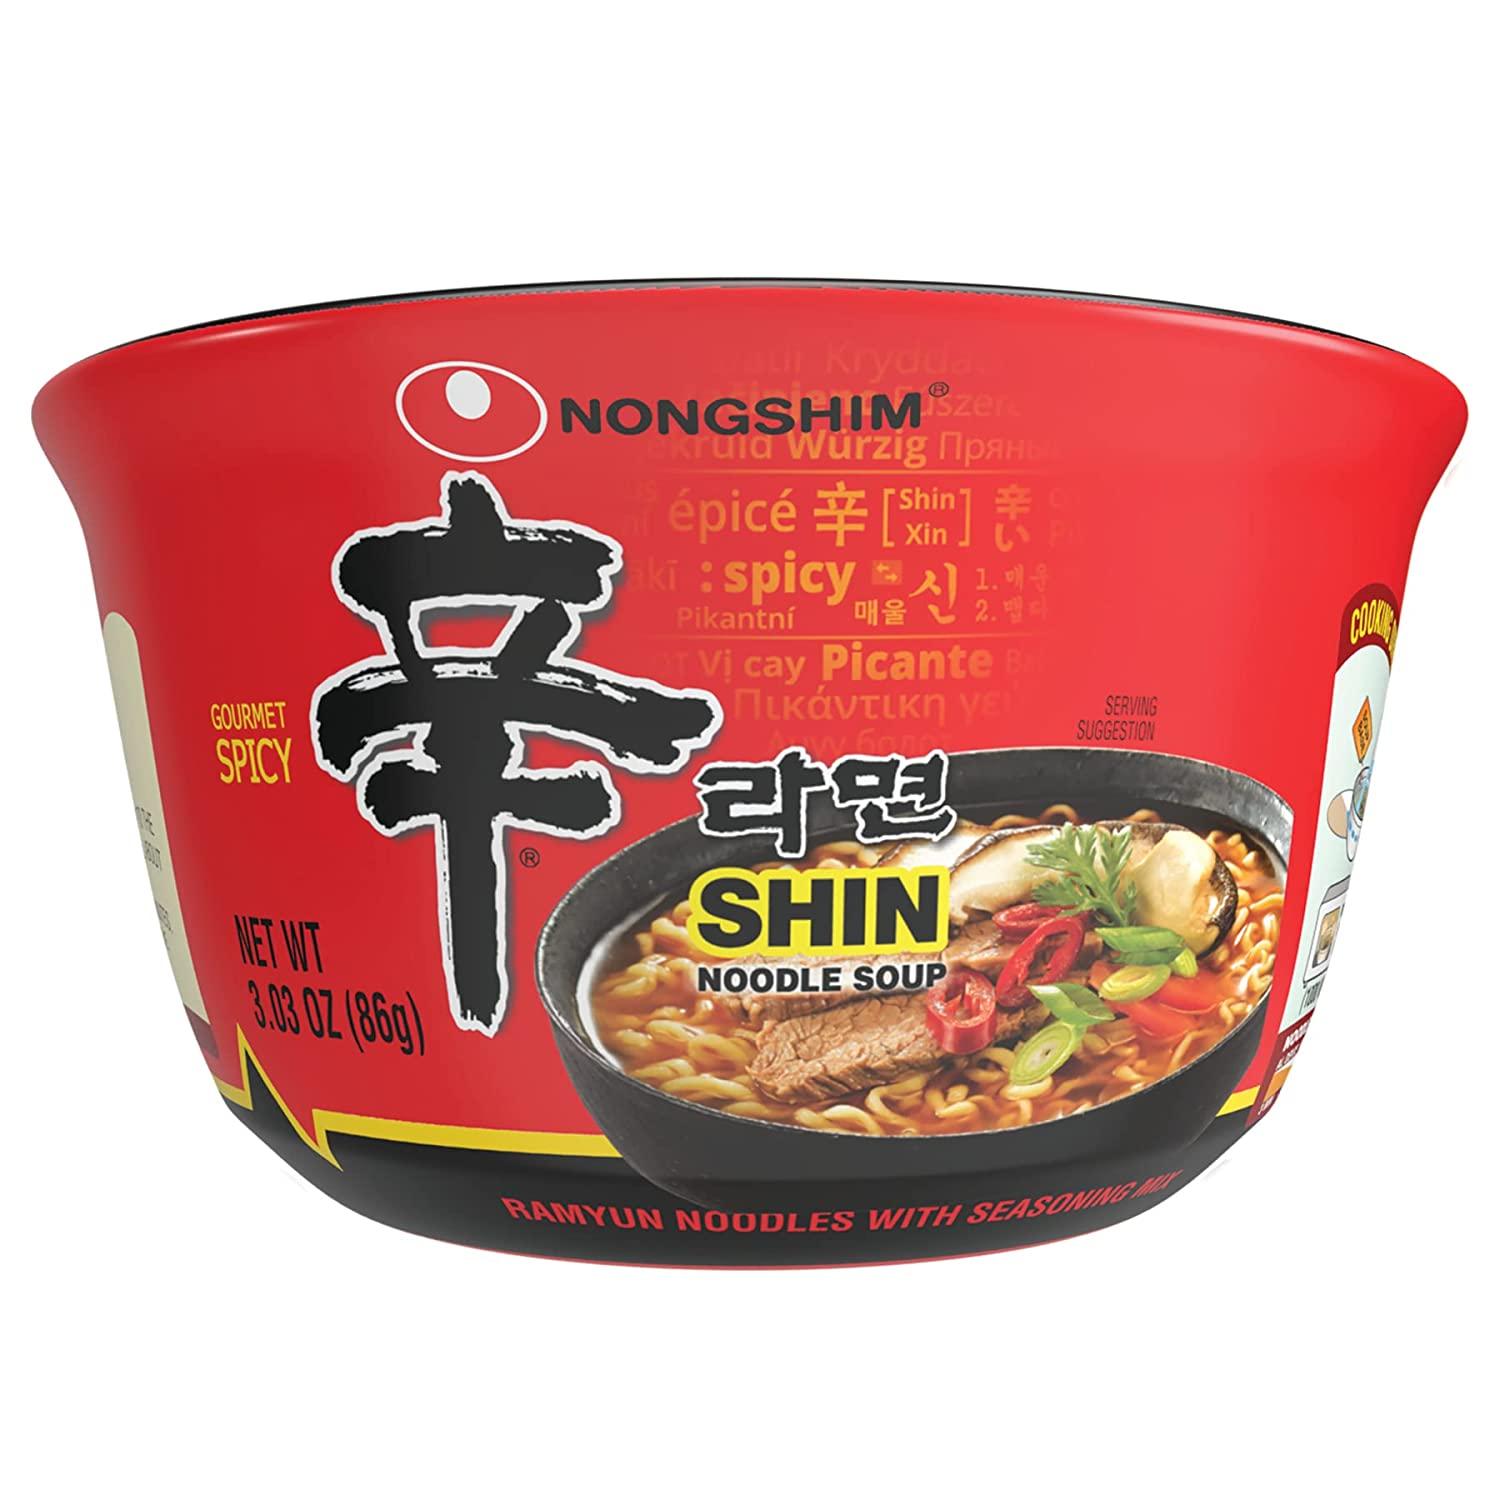 Nongshim Shin Original Ramyun Bowls 12 Pack for $9.98